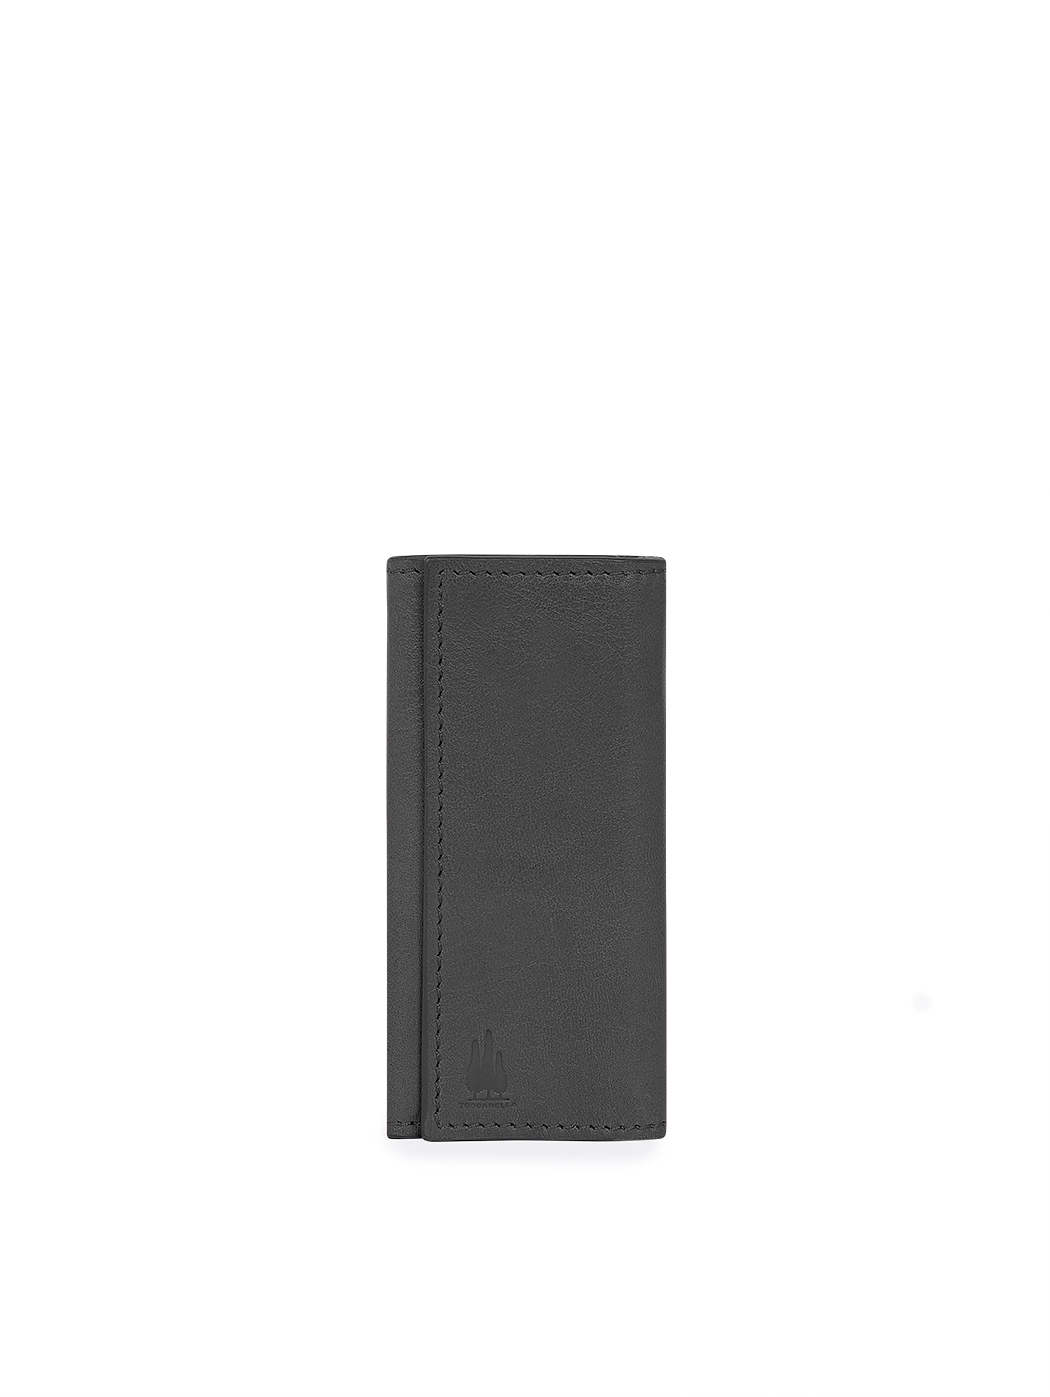 Small Leather Key Case with 4 Key Hooks Black